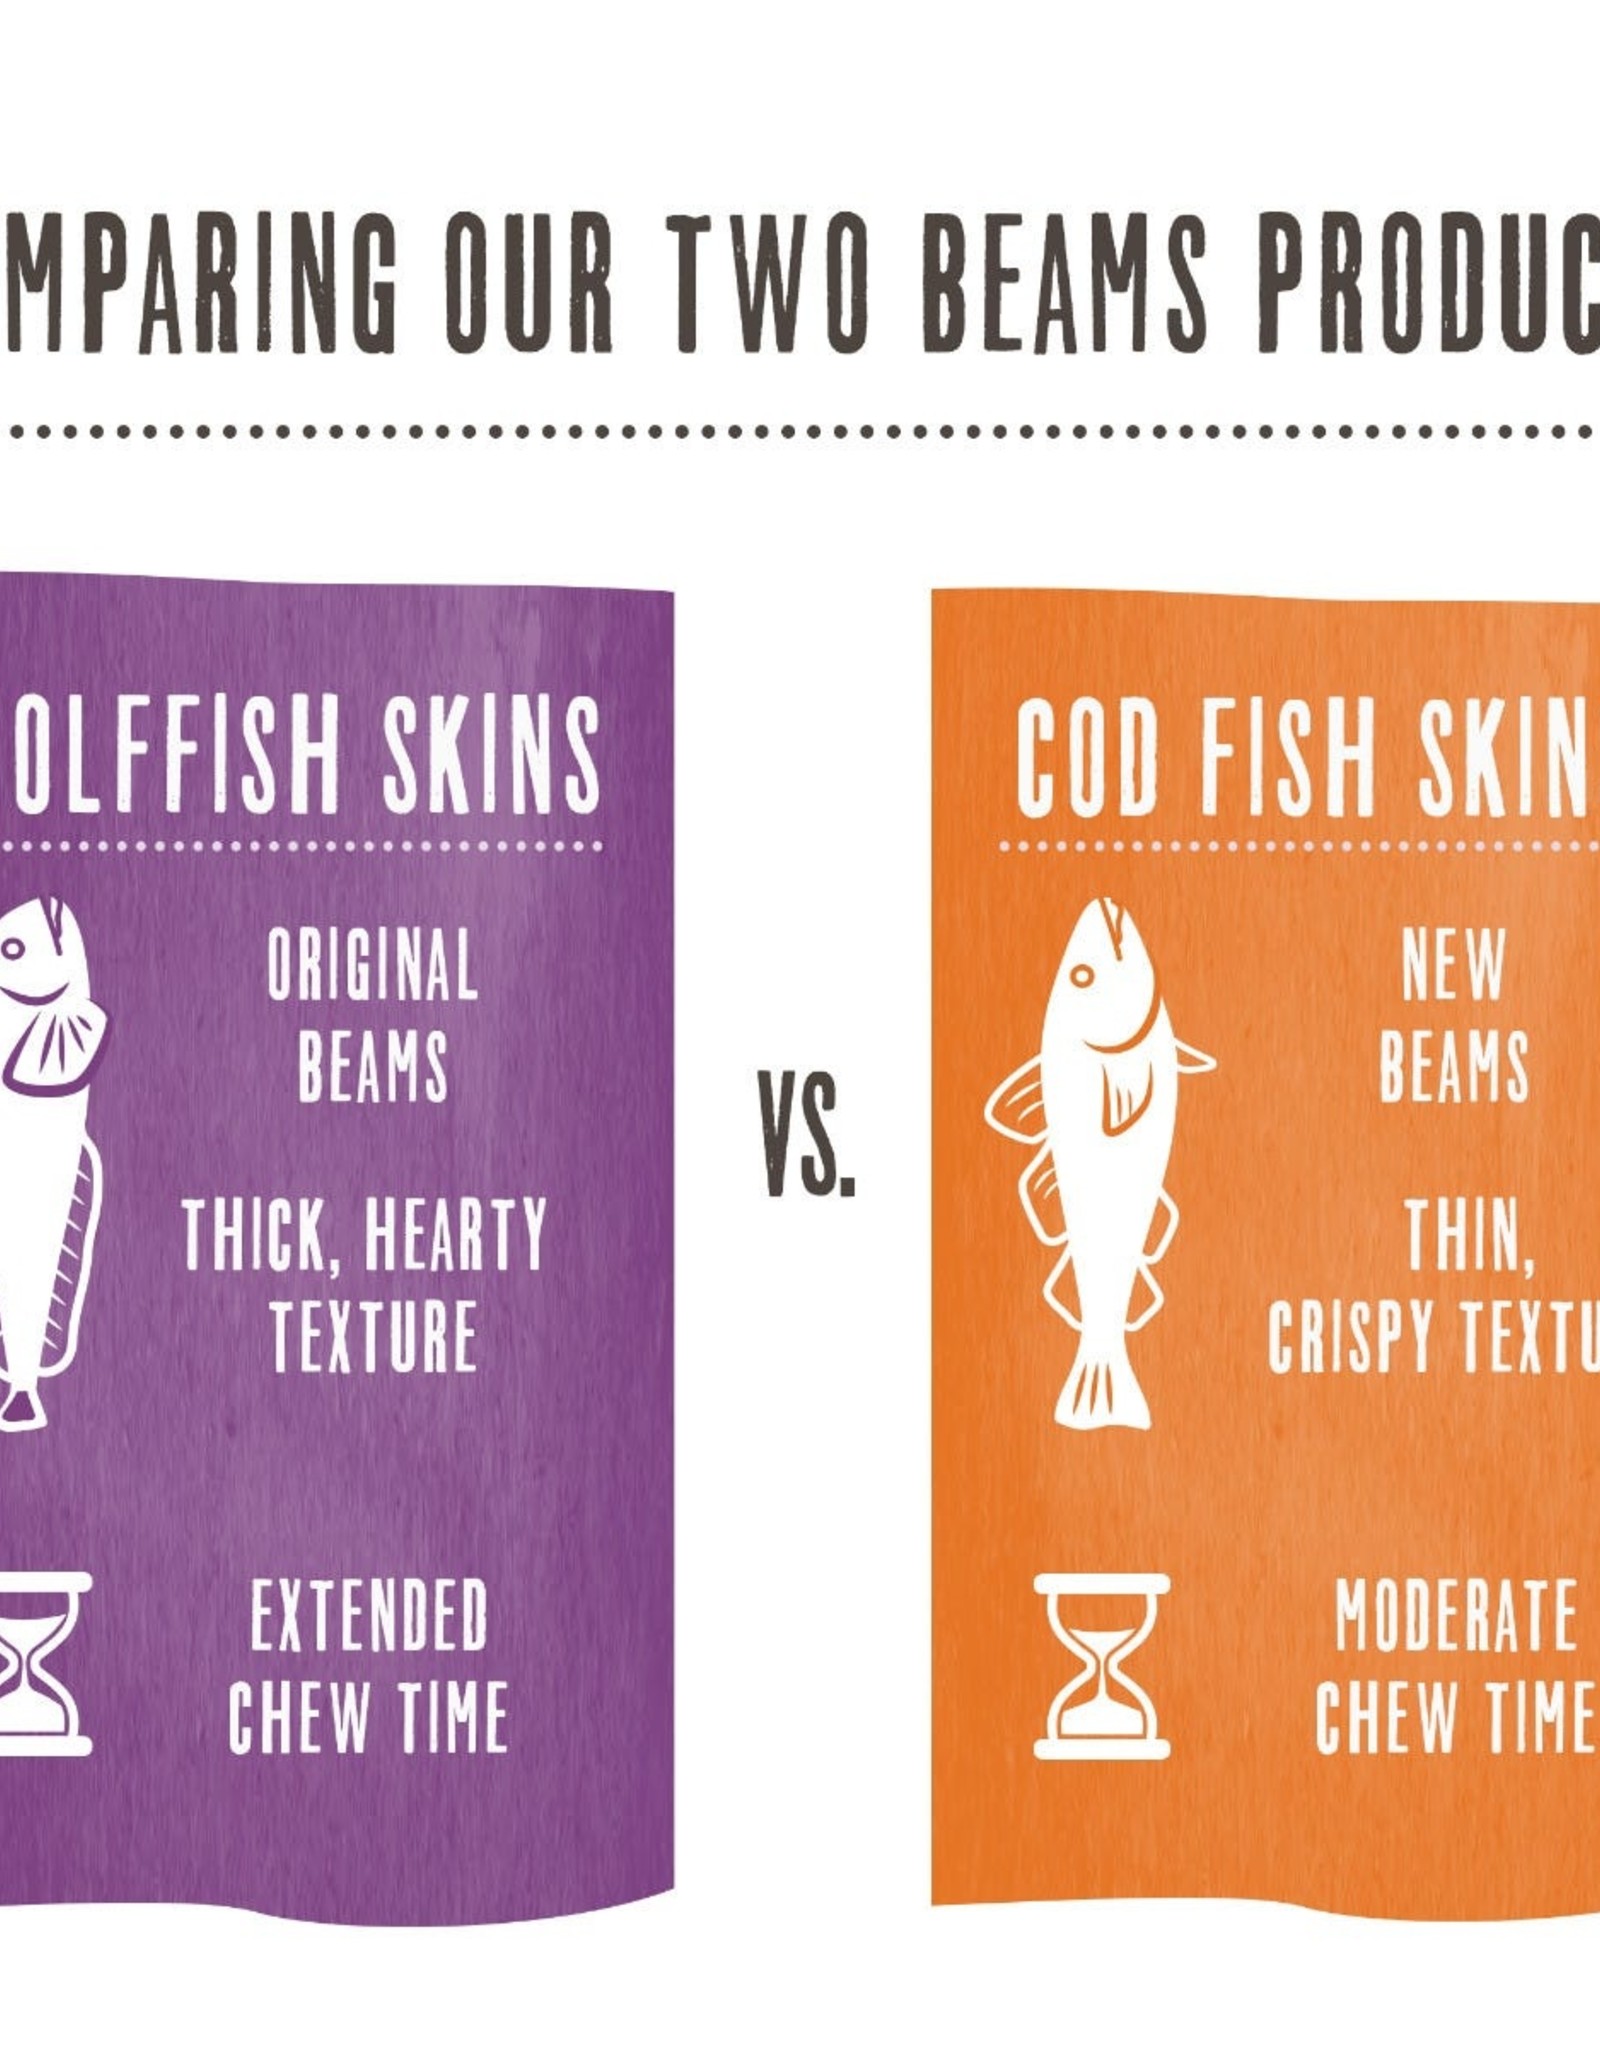 THE HONEST KITCHEN The Honest Kitchen Beams® Ocean Chews - Cod Fish Skins 2.75 oz